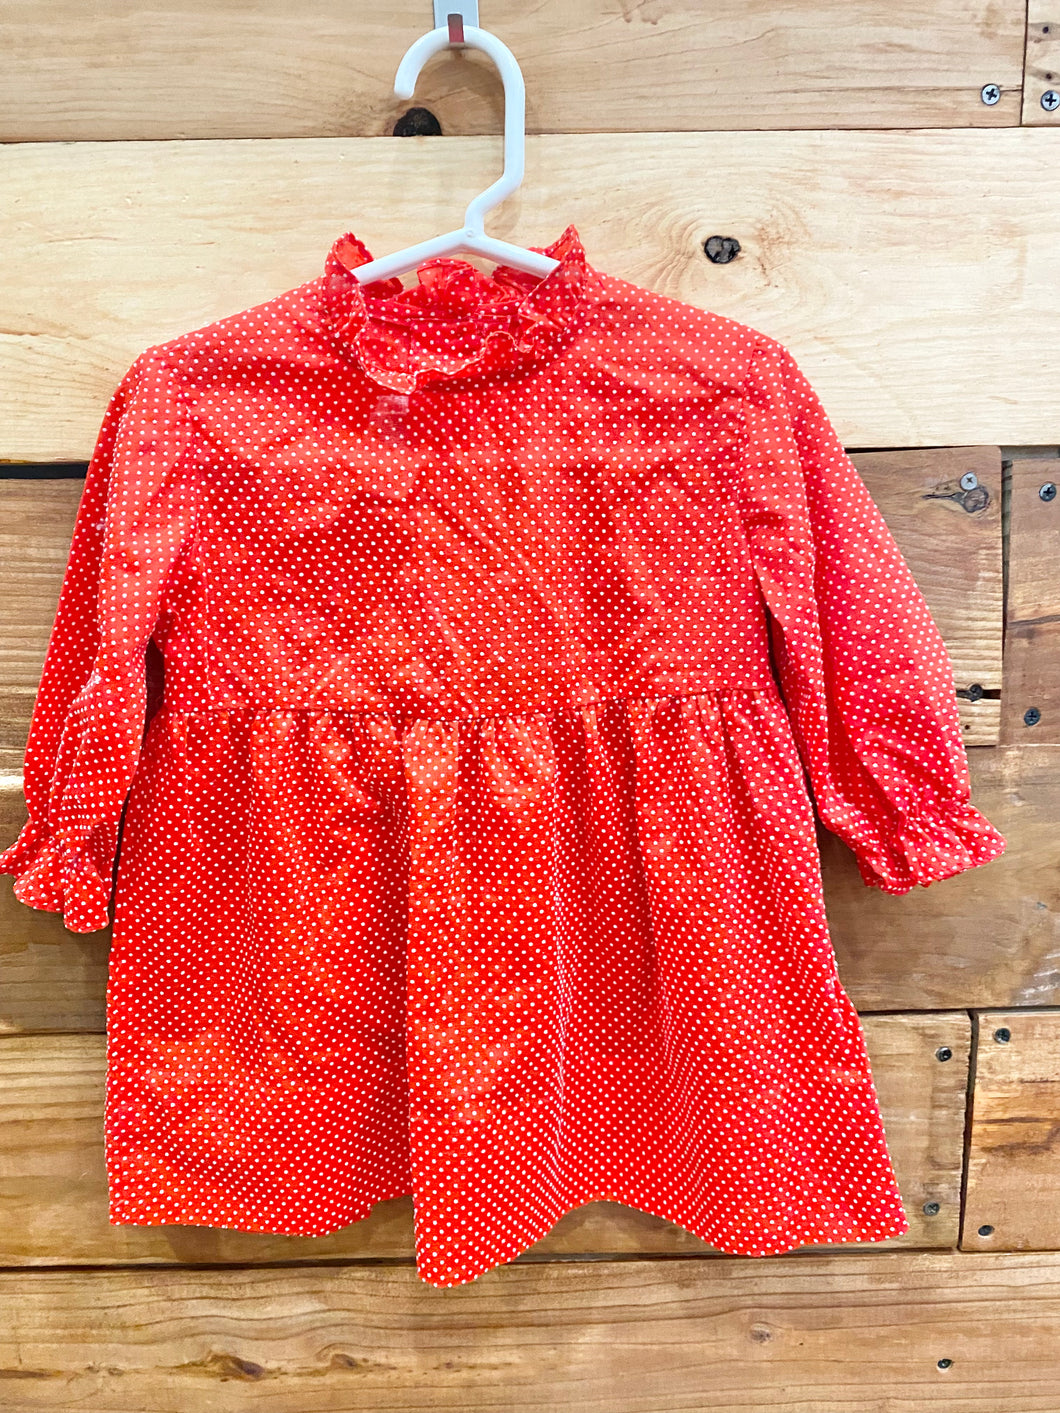 Polly Flinders Red Polka Dot Dress Size 4